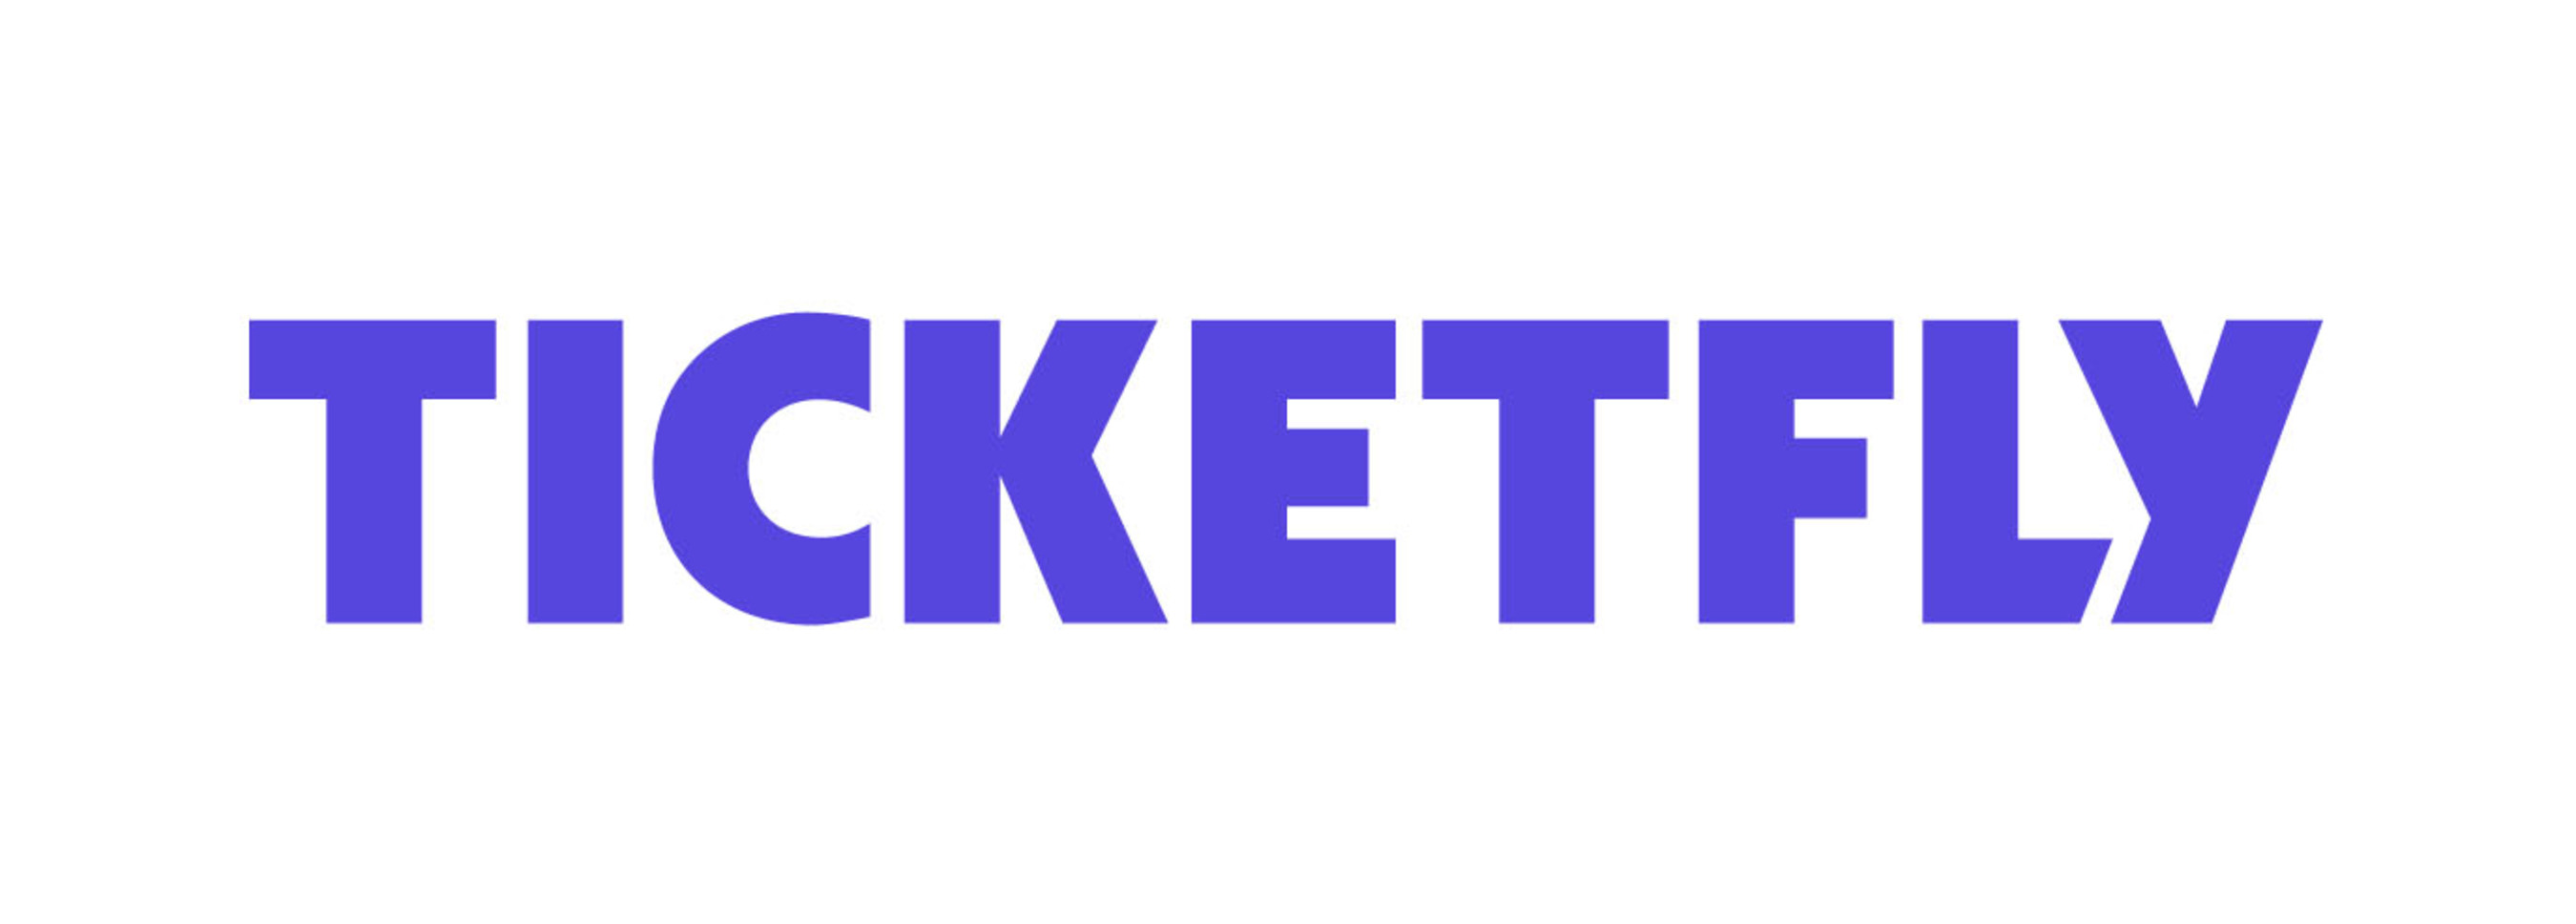 Ticketfly wordmark